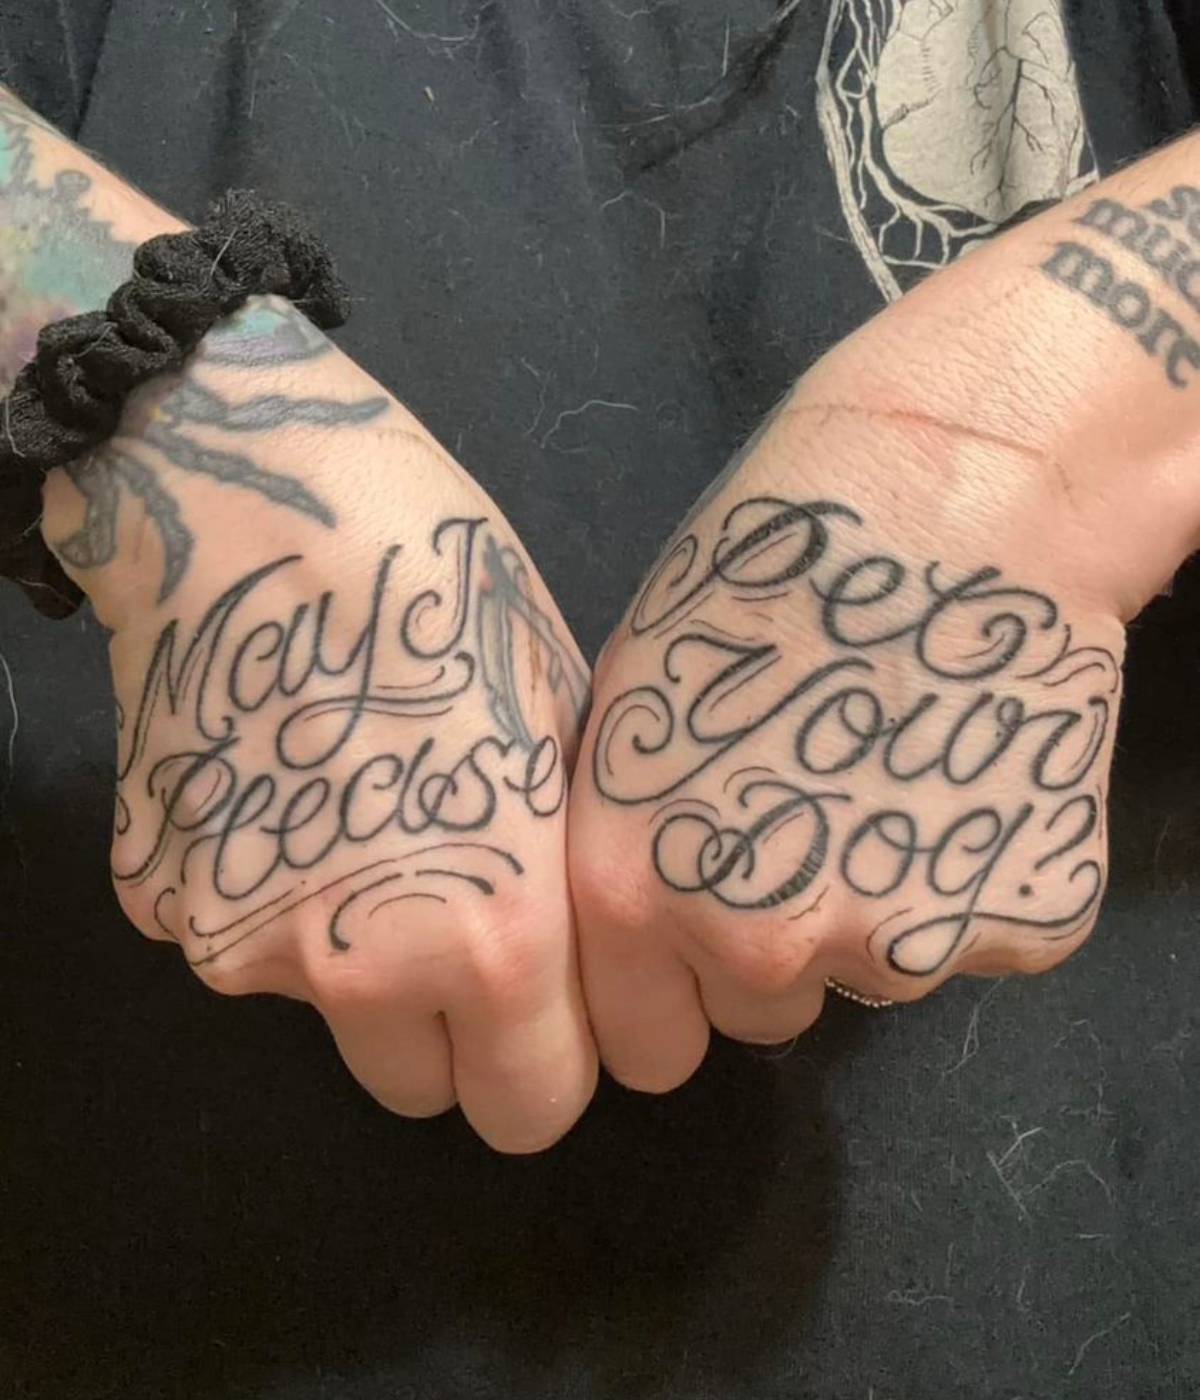 Mae Doll's tattooed hands